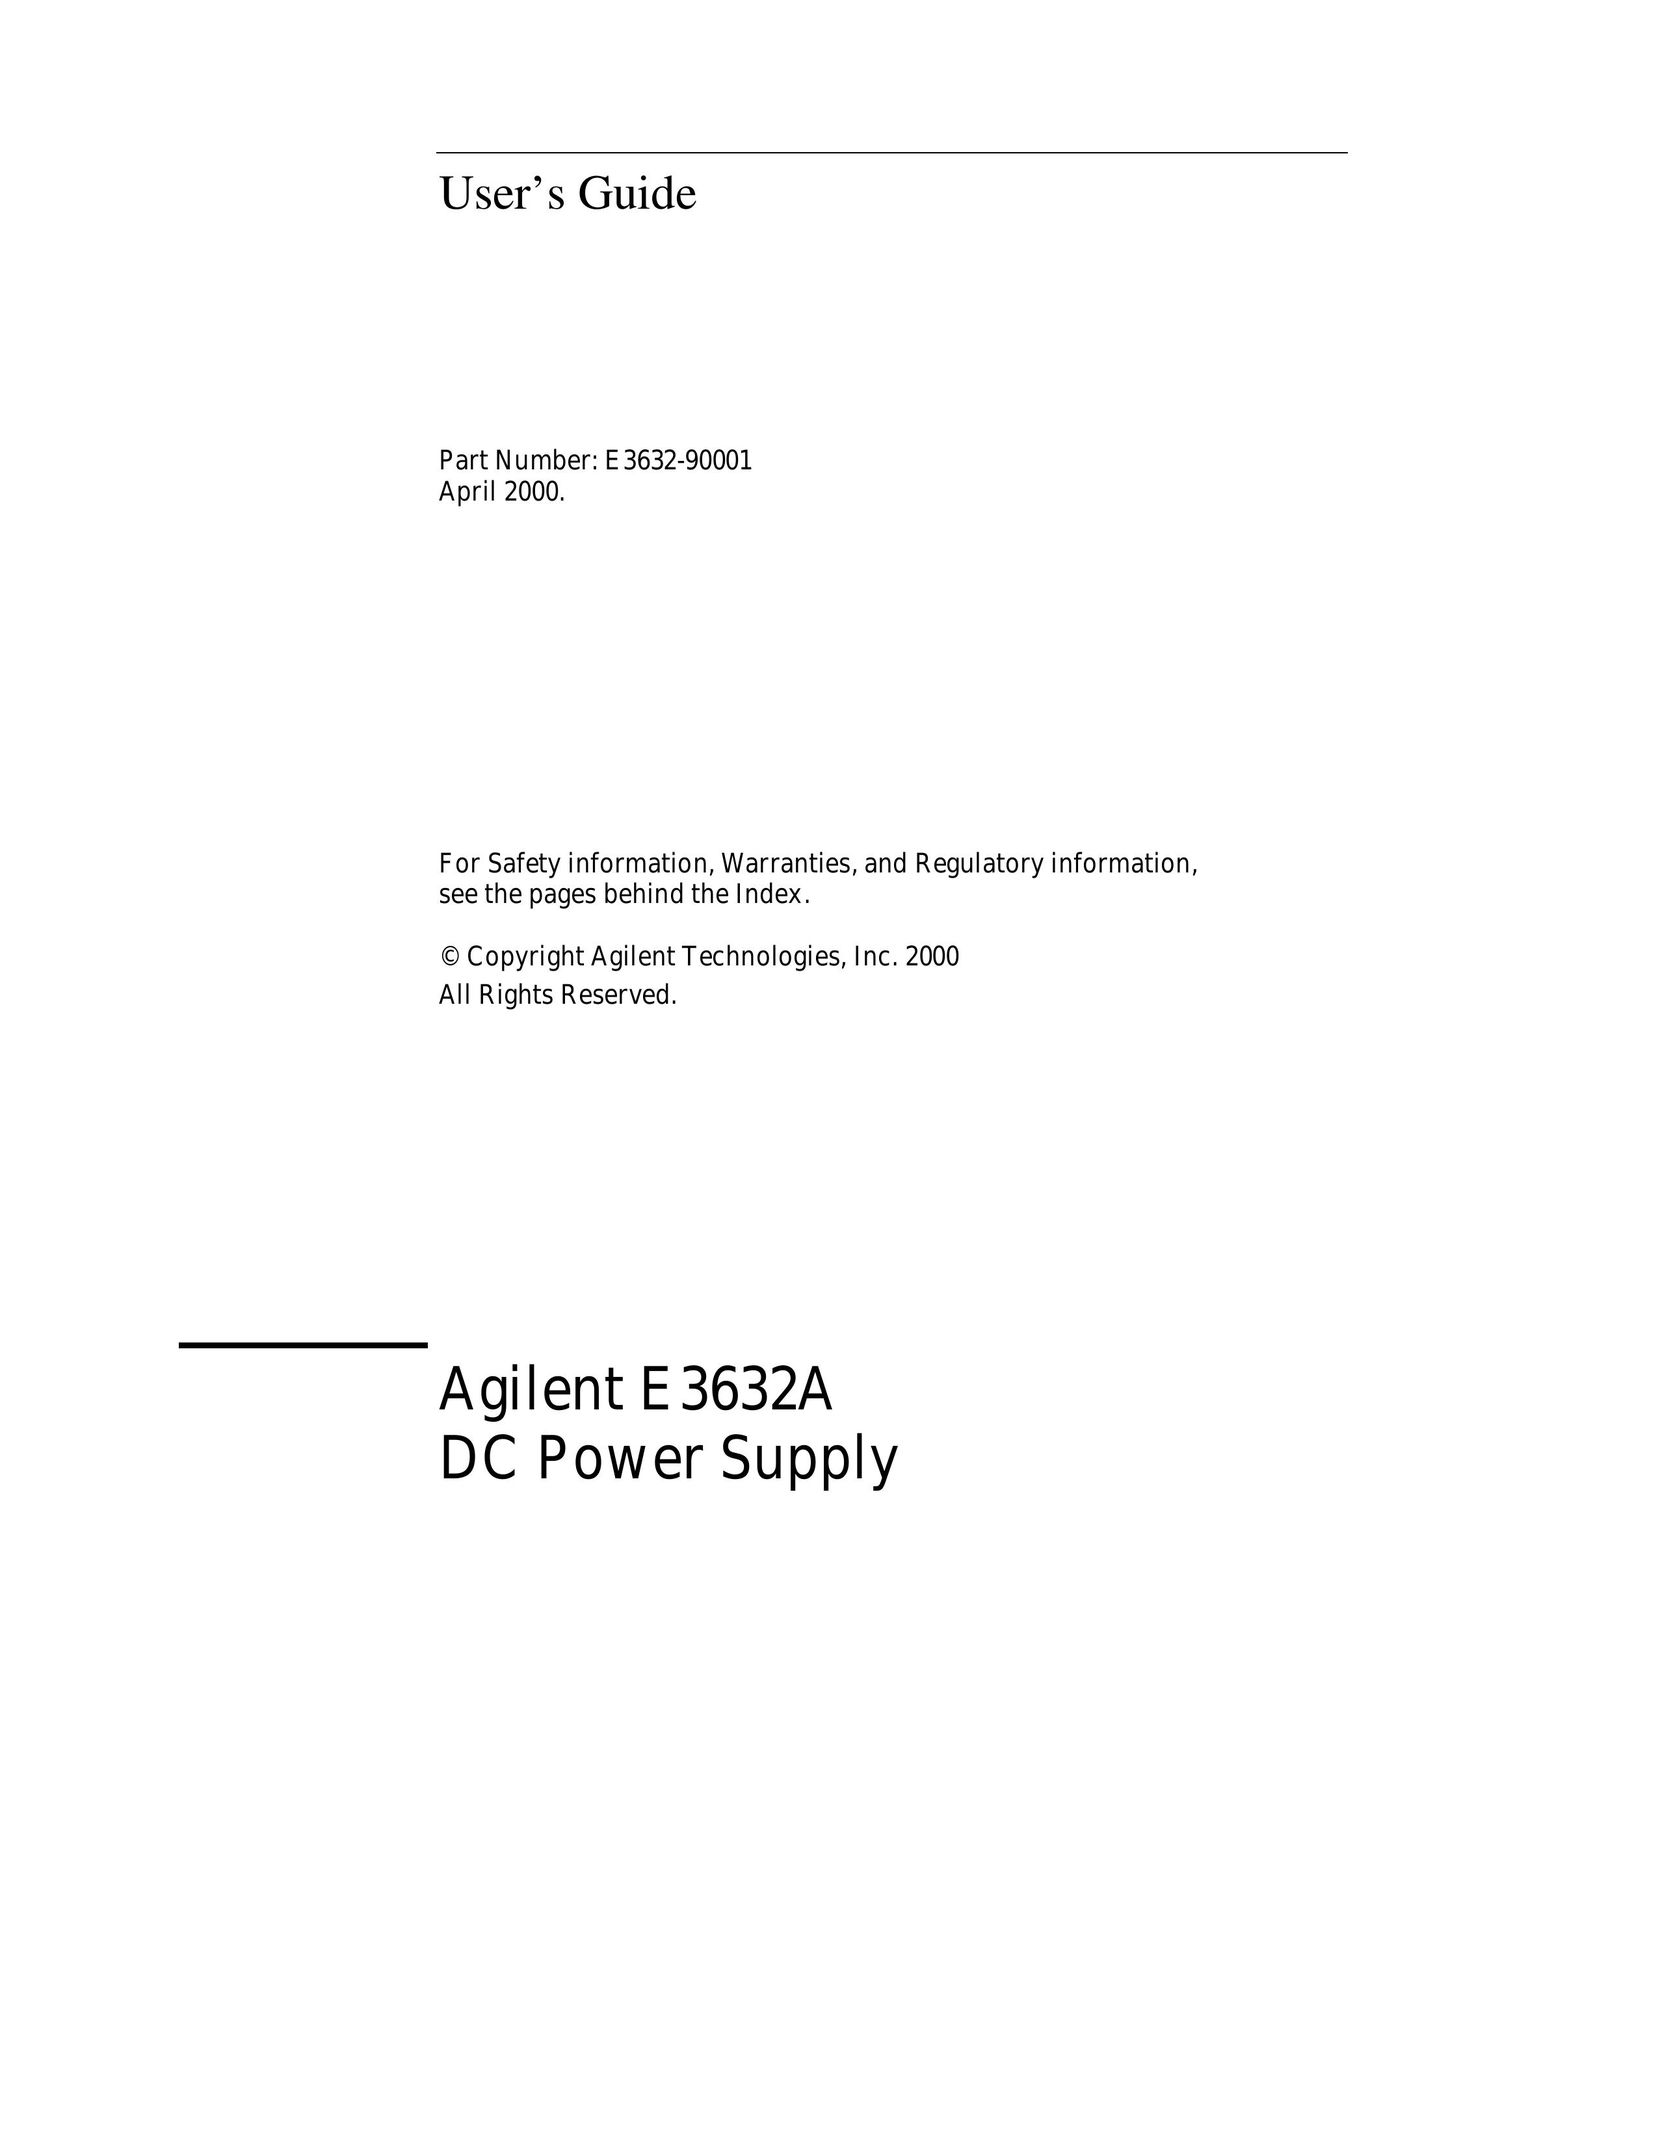 Agilent Technologies E3632A Welding System User Manual